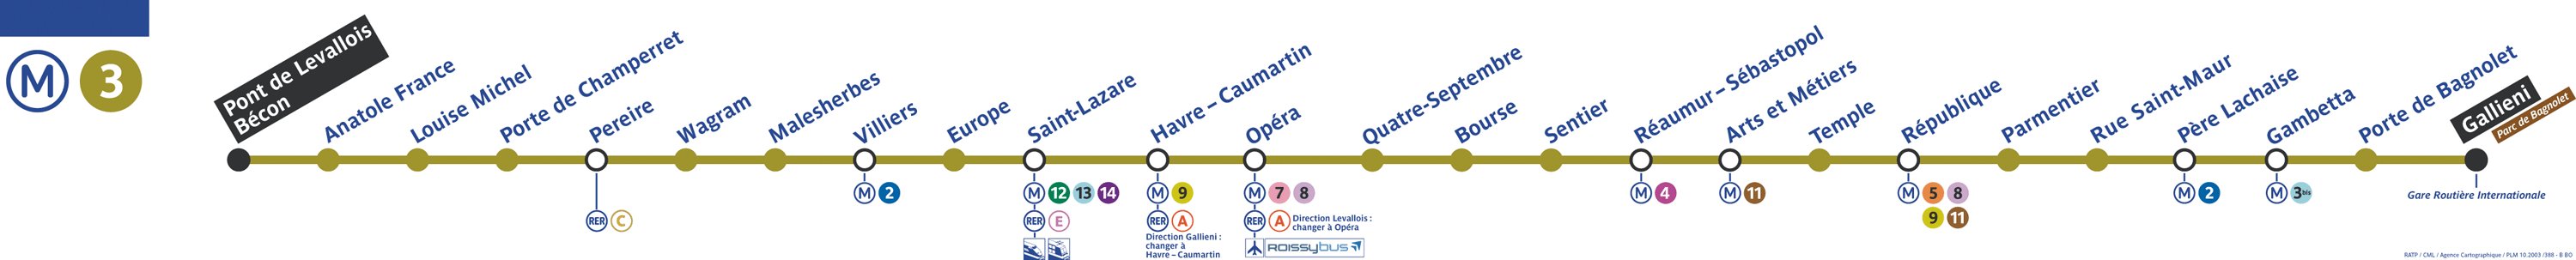 Metro De Paris